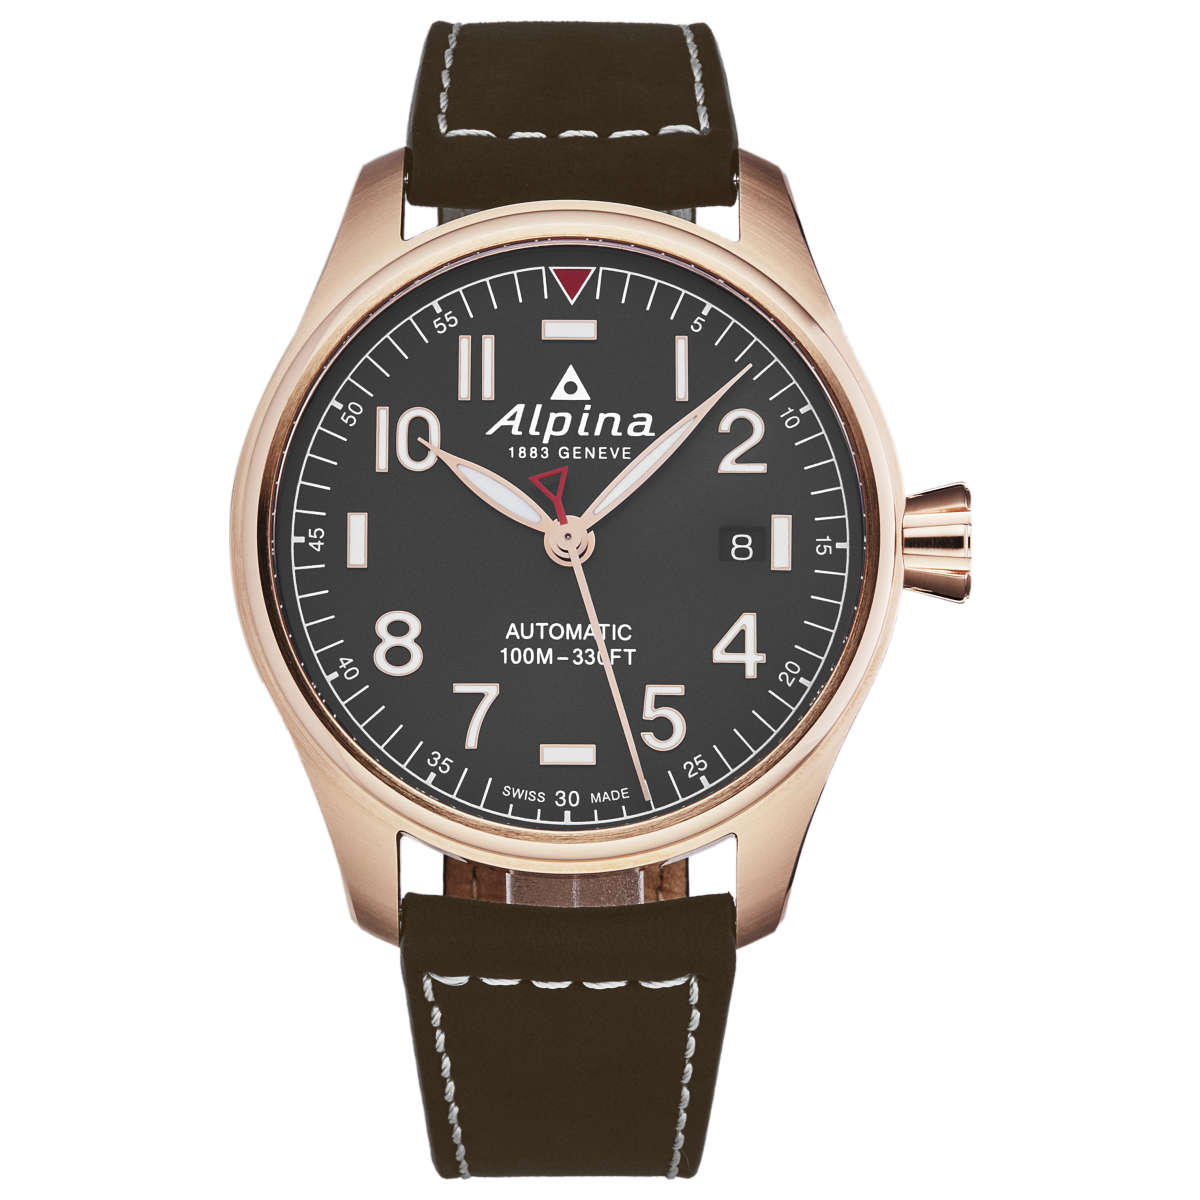 Alpina watch